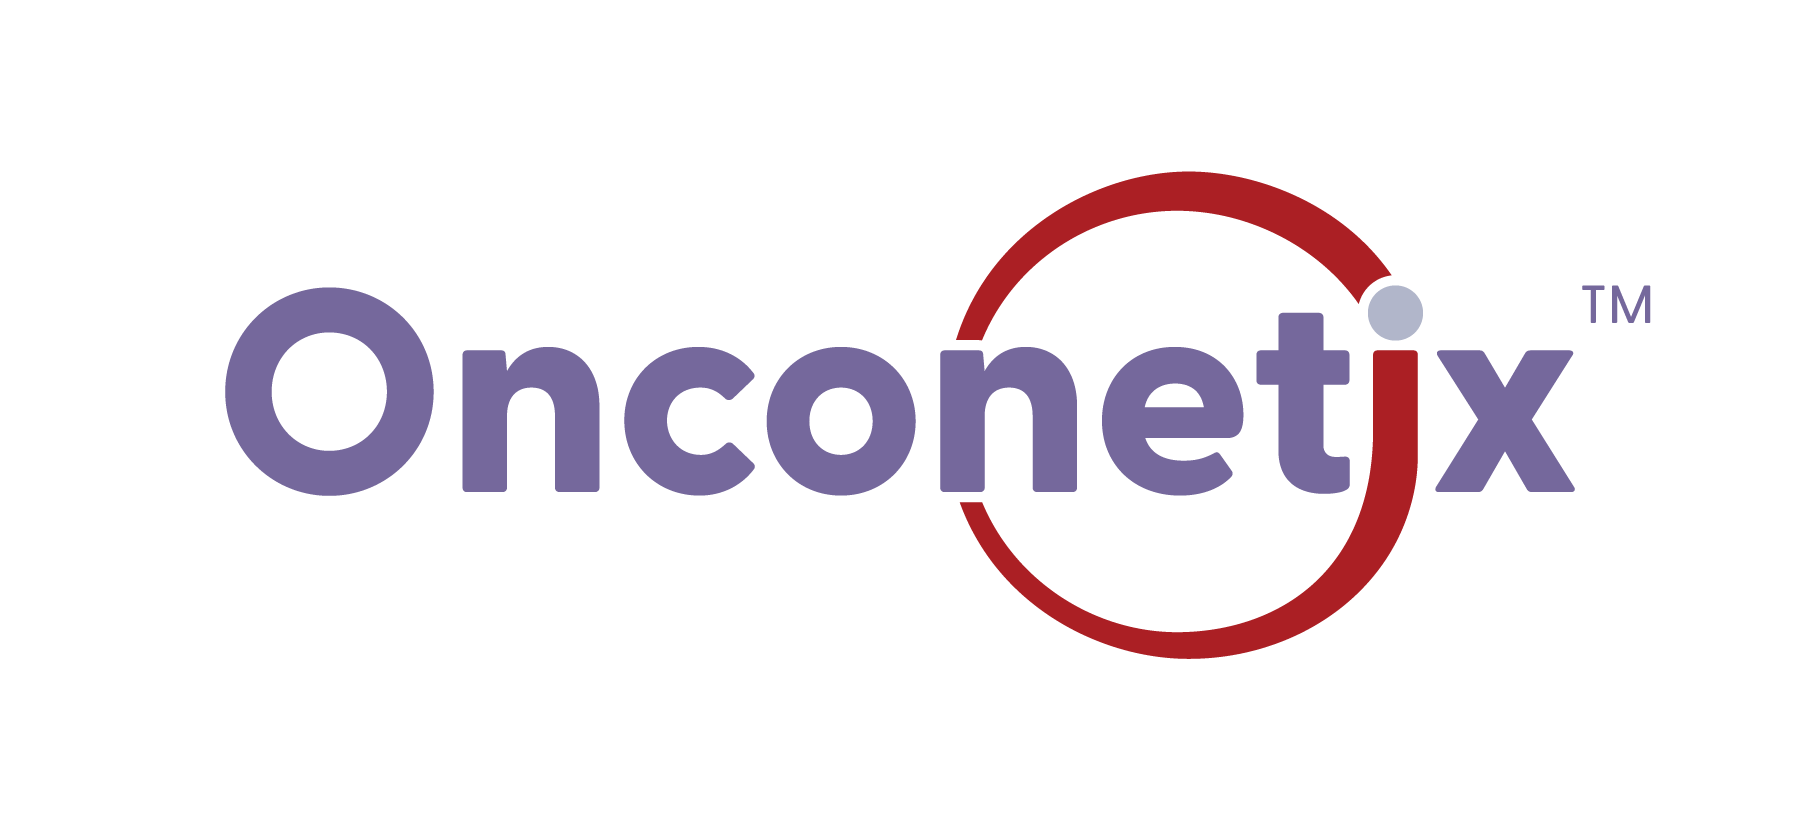 Onconetix, Inc. Logo